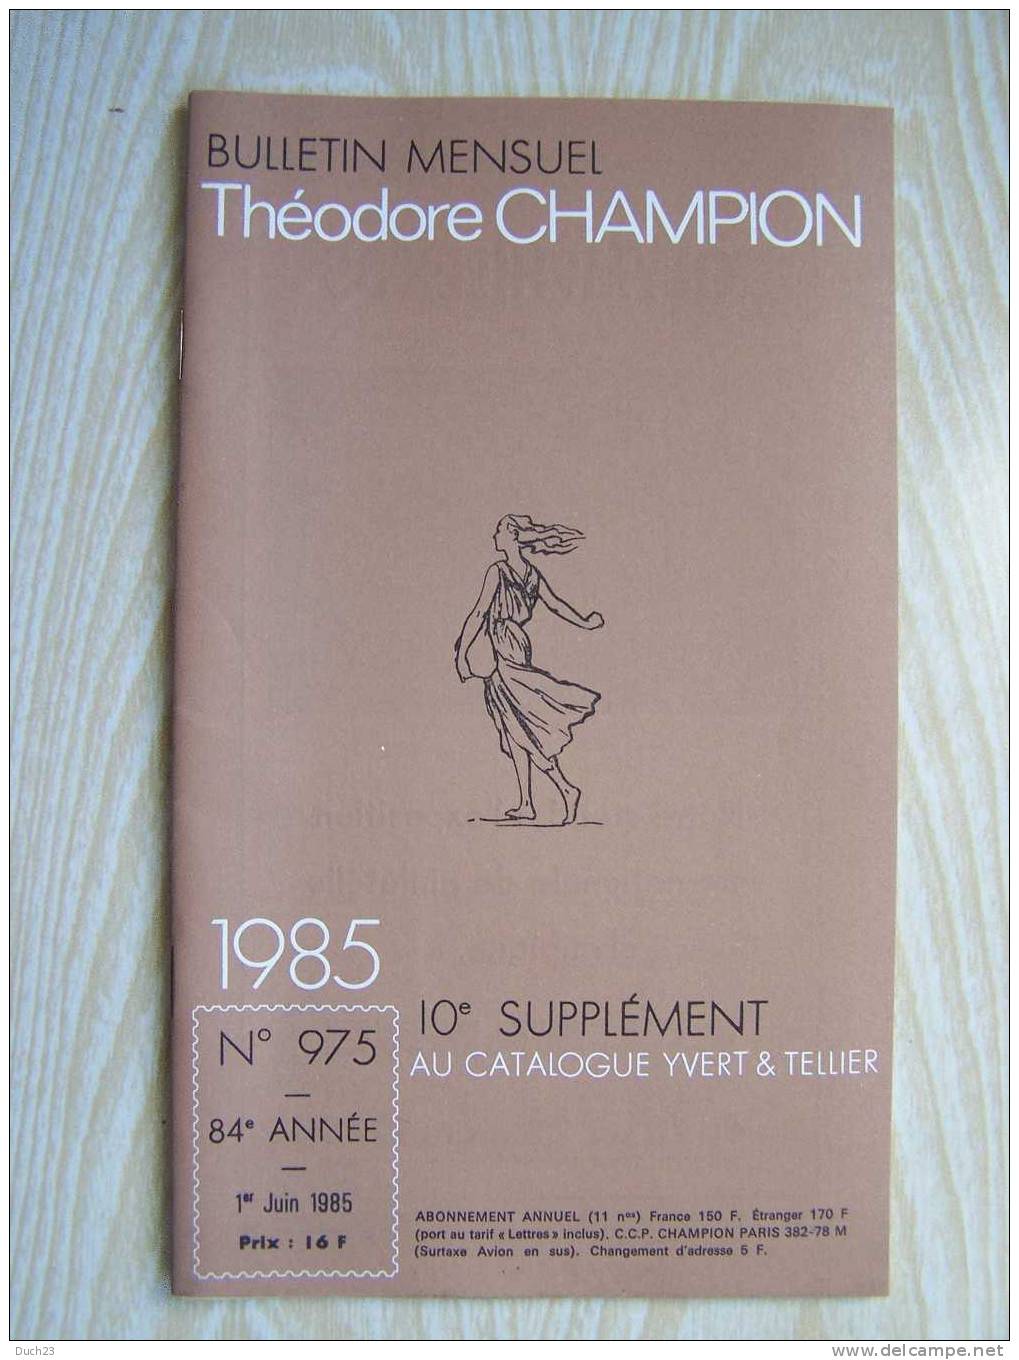 BULLETIN MENSUEL THEODORE CHAMPION 1985 N° 975  10 EME SUPPLEMENT TRES BON ETAT REF CD - France